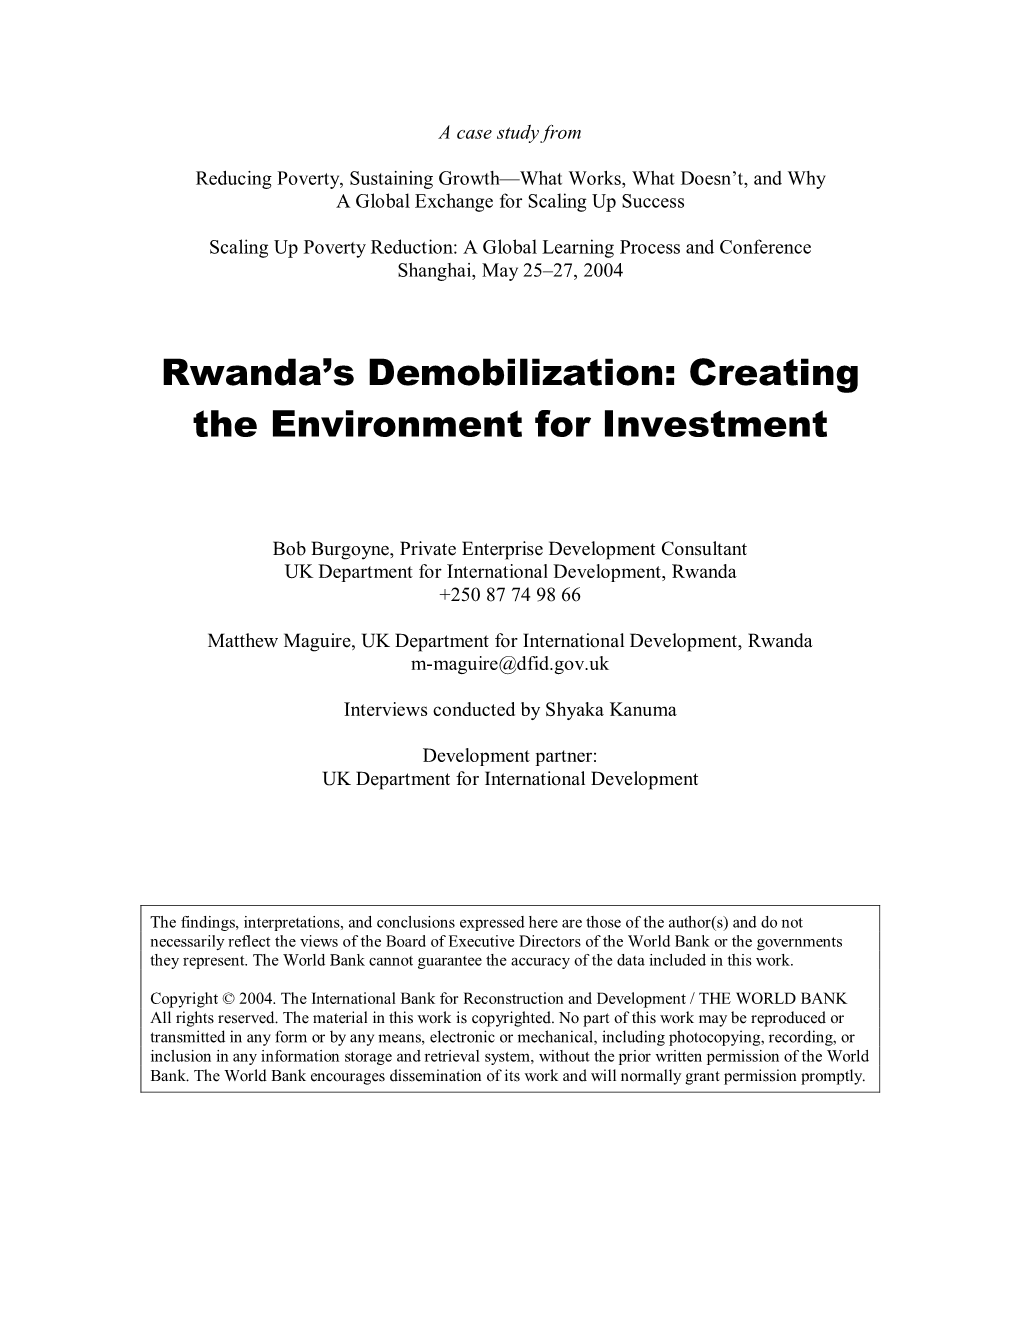 Rwanda's Demobilization